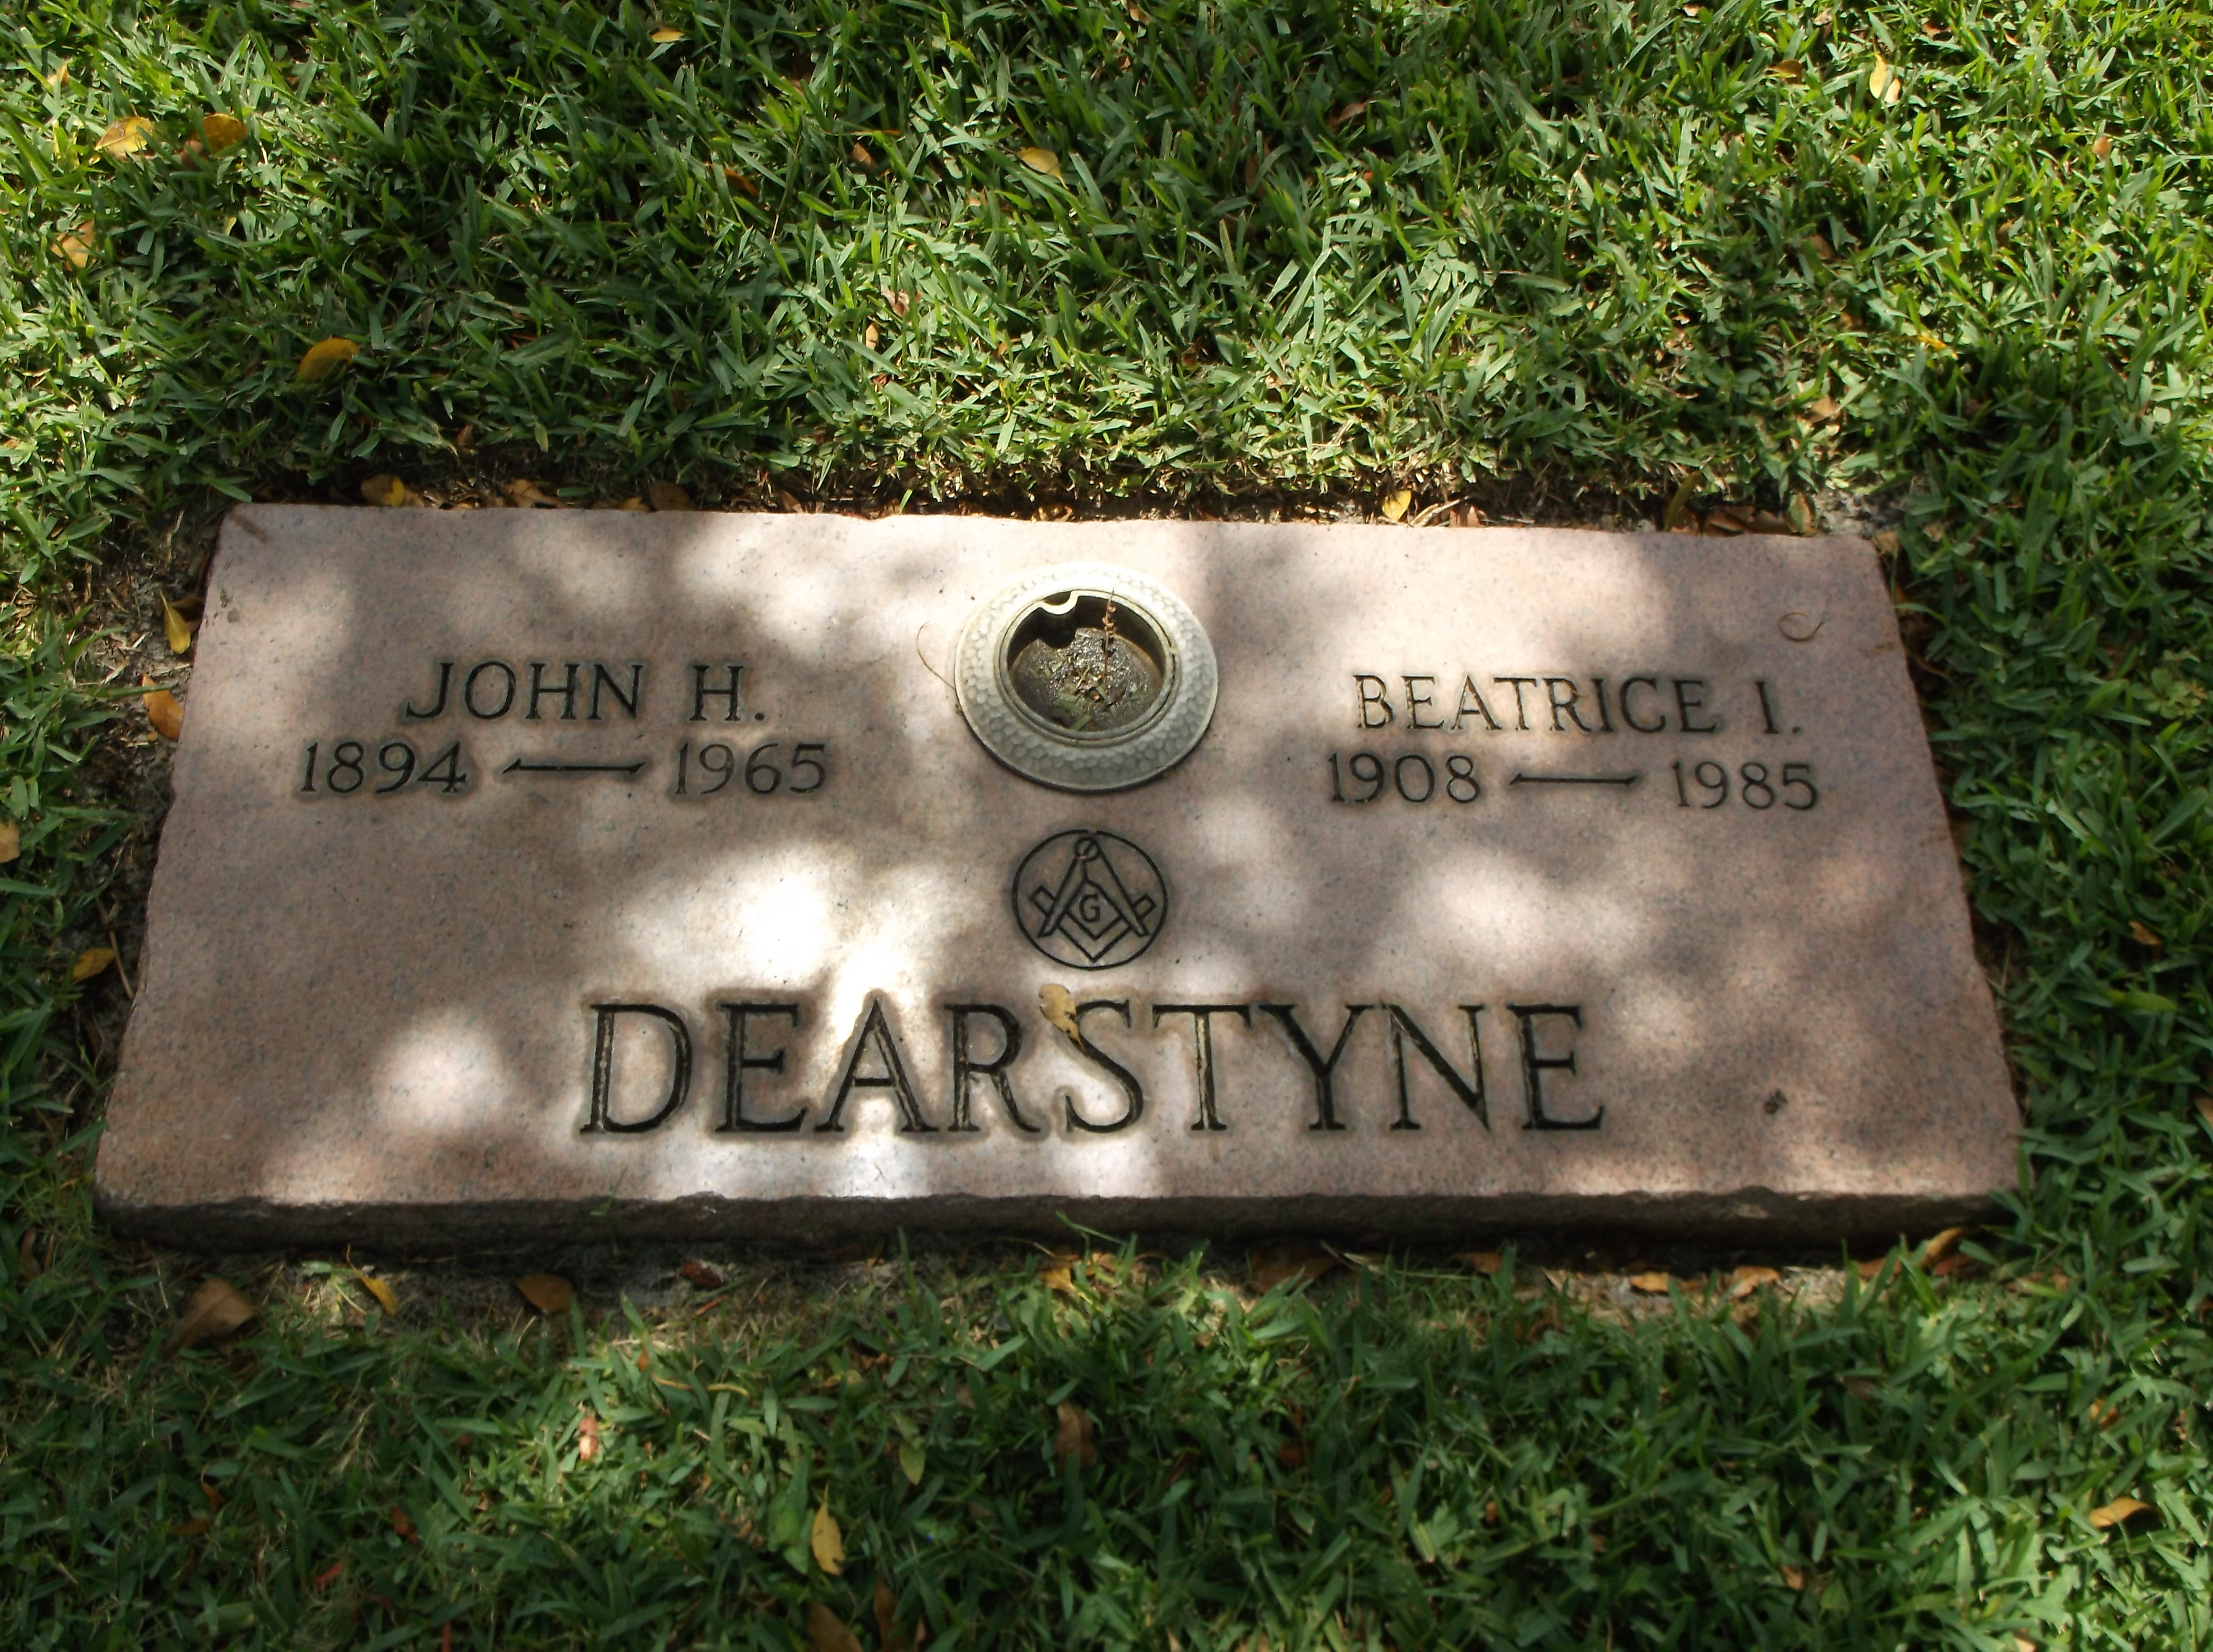 Beatrice I Dearstyne